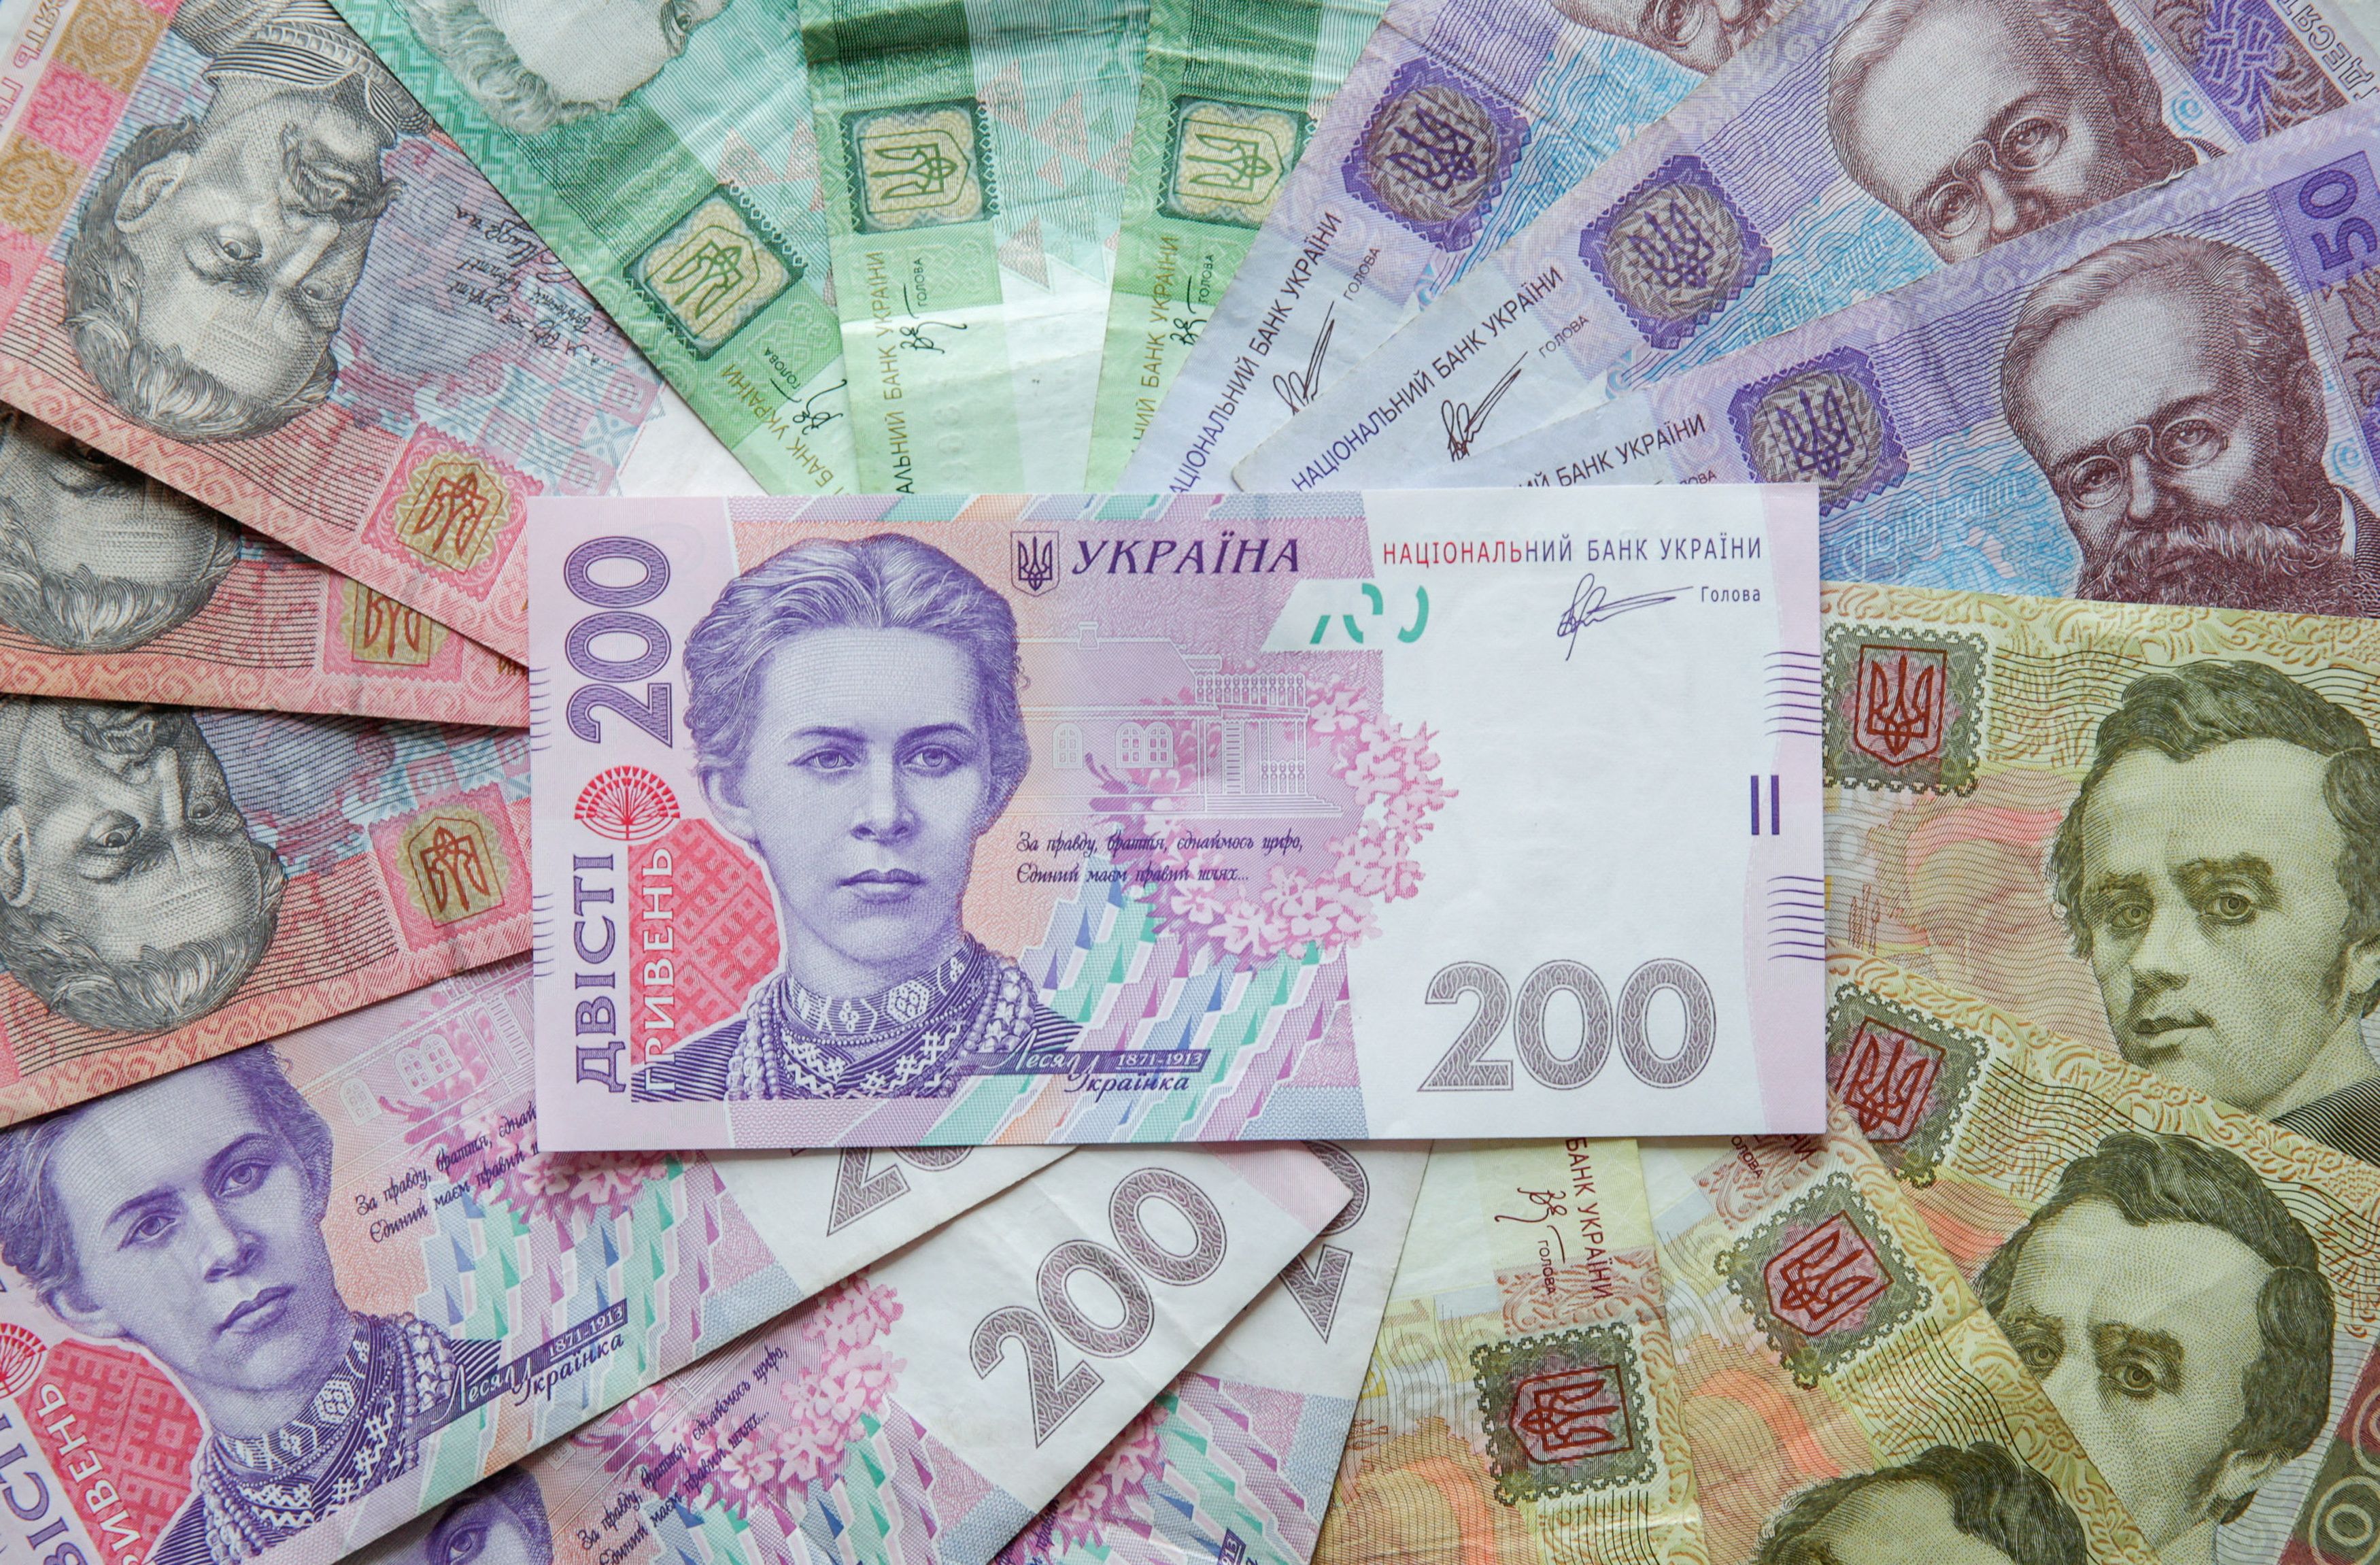 Ukraine currency